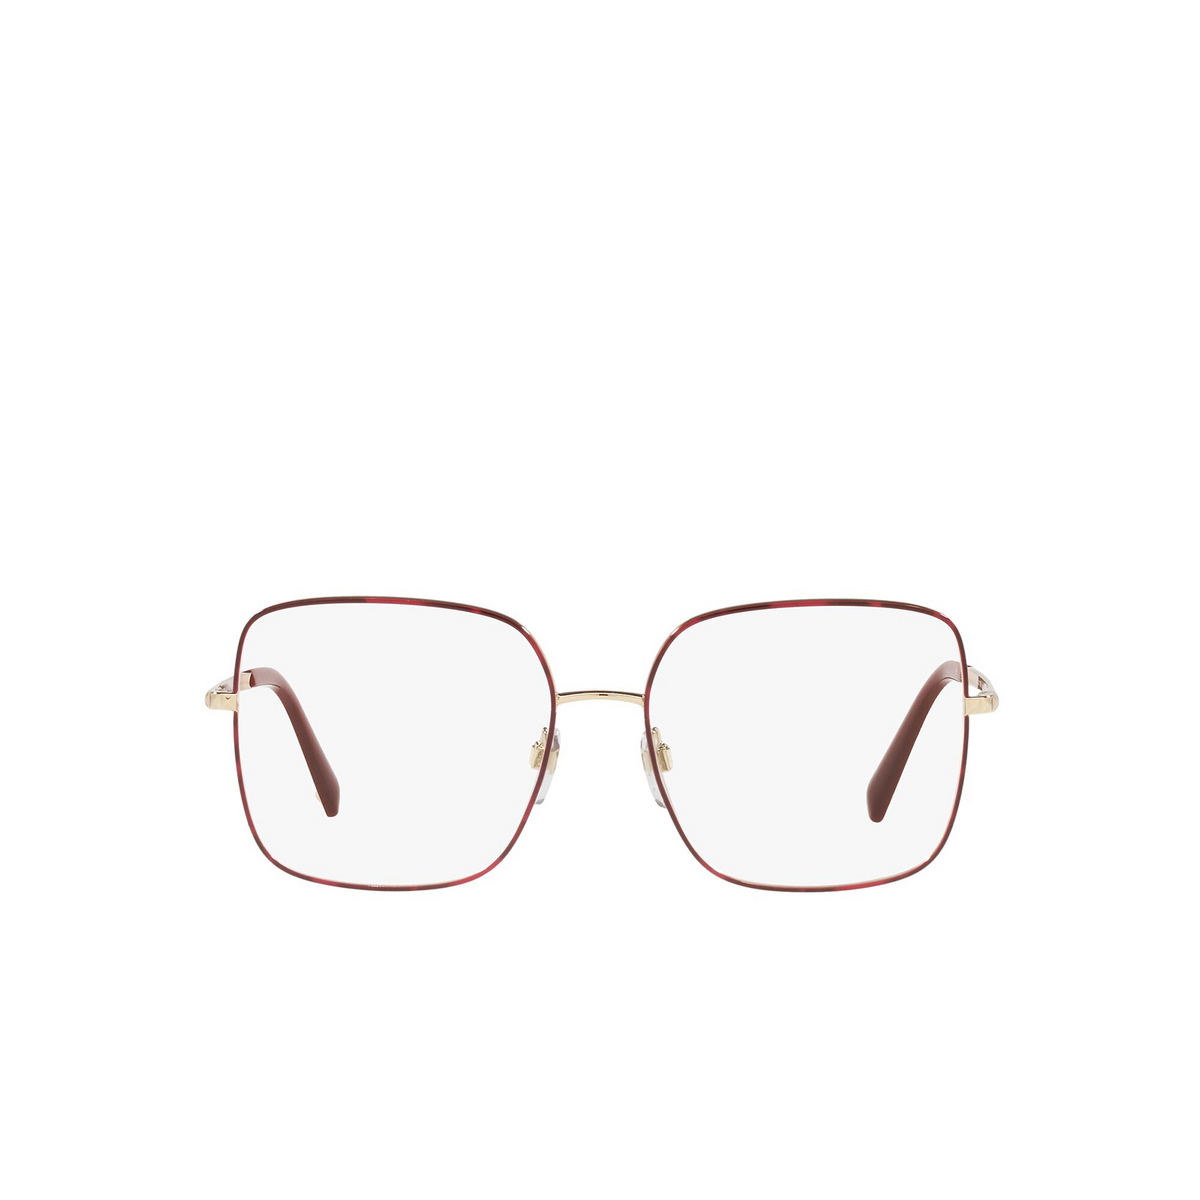 Valentino® Square Sunglasses: VA1024 color Red Havana / Light Gold 3068 - front view.